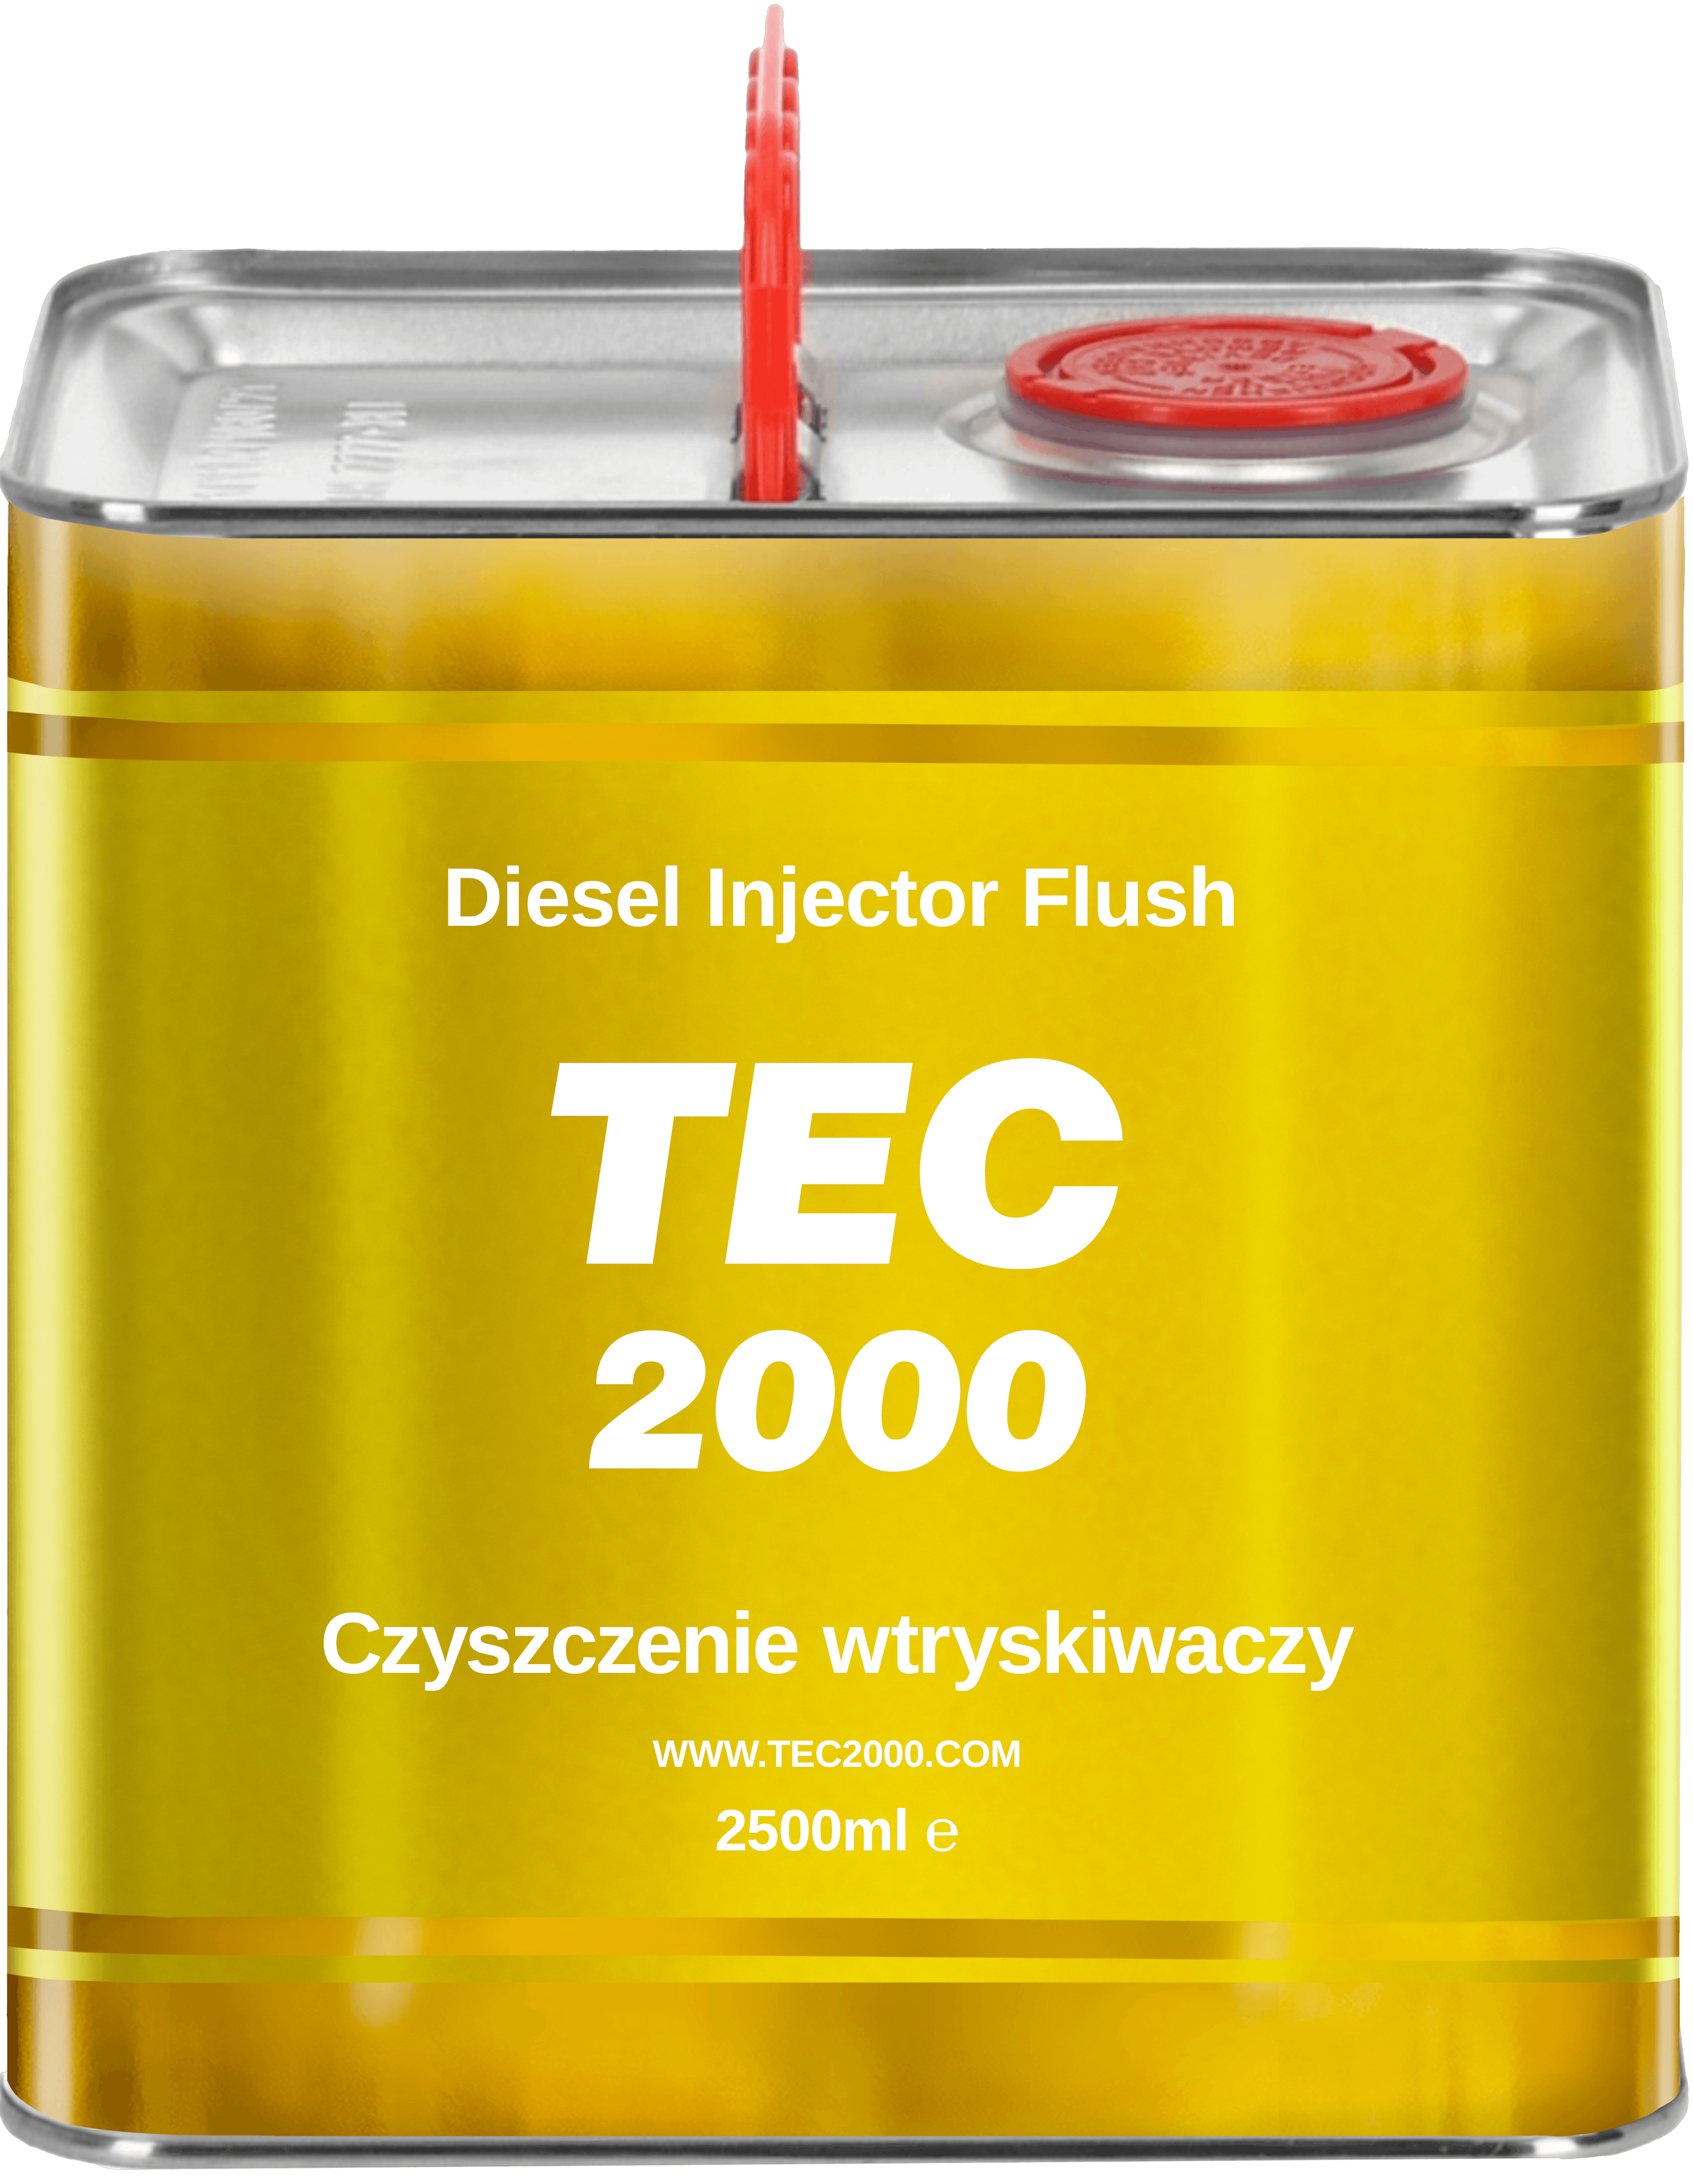 TEC 2000 Diesel Injector Flush 